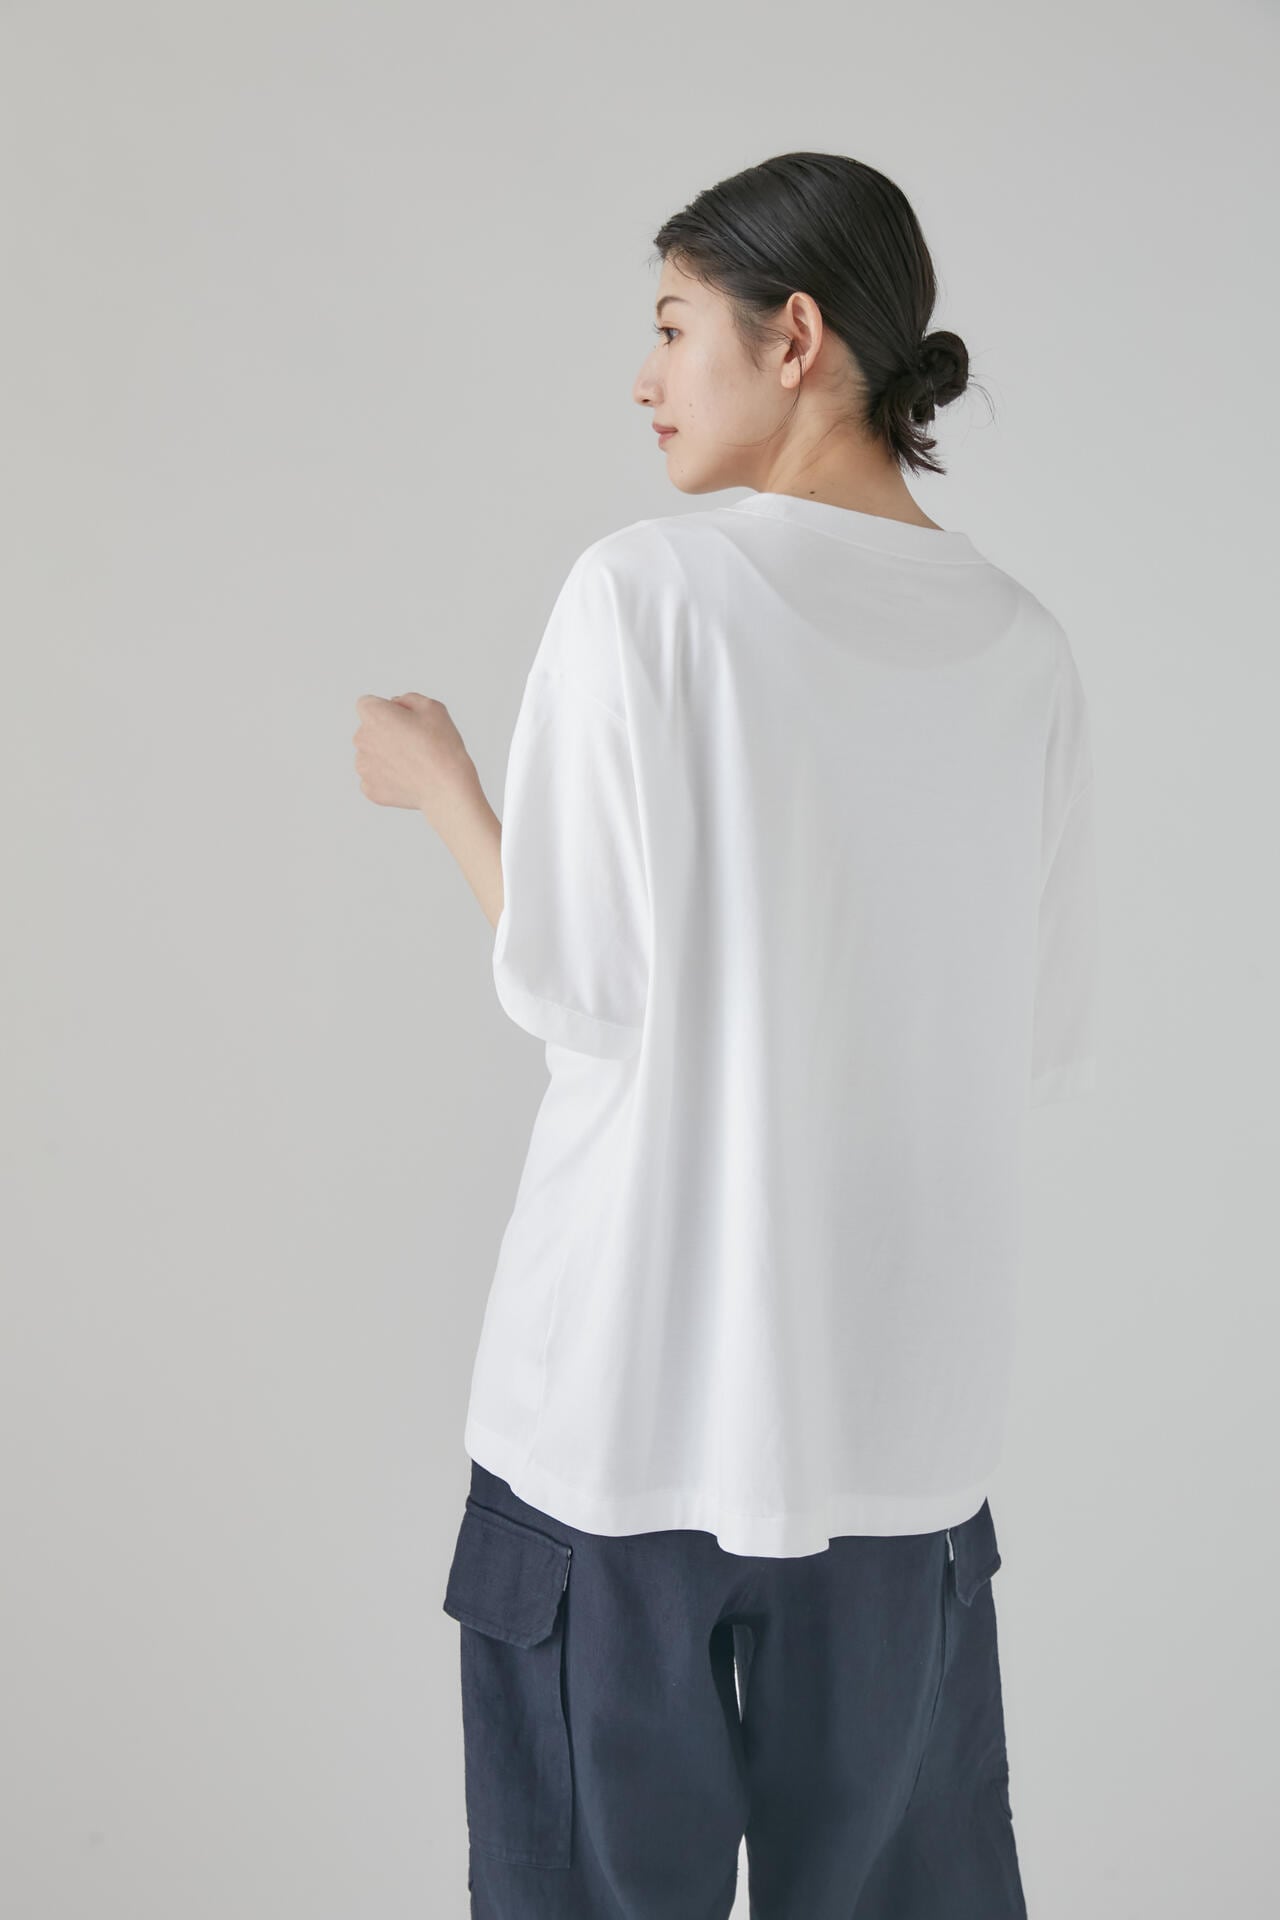 [M] GG POKER Tシャツ 白 レインボーロゴ